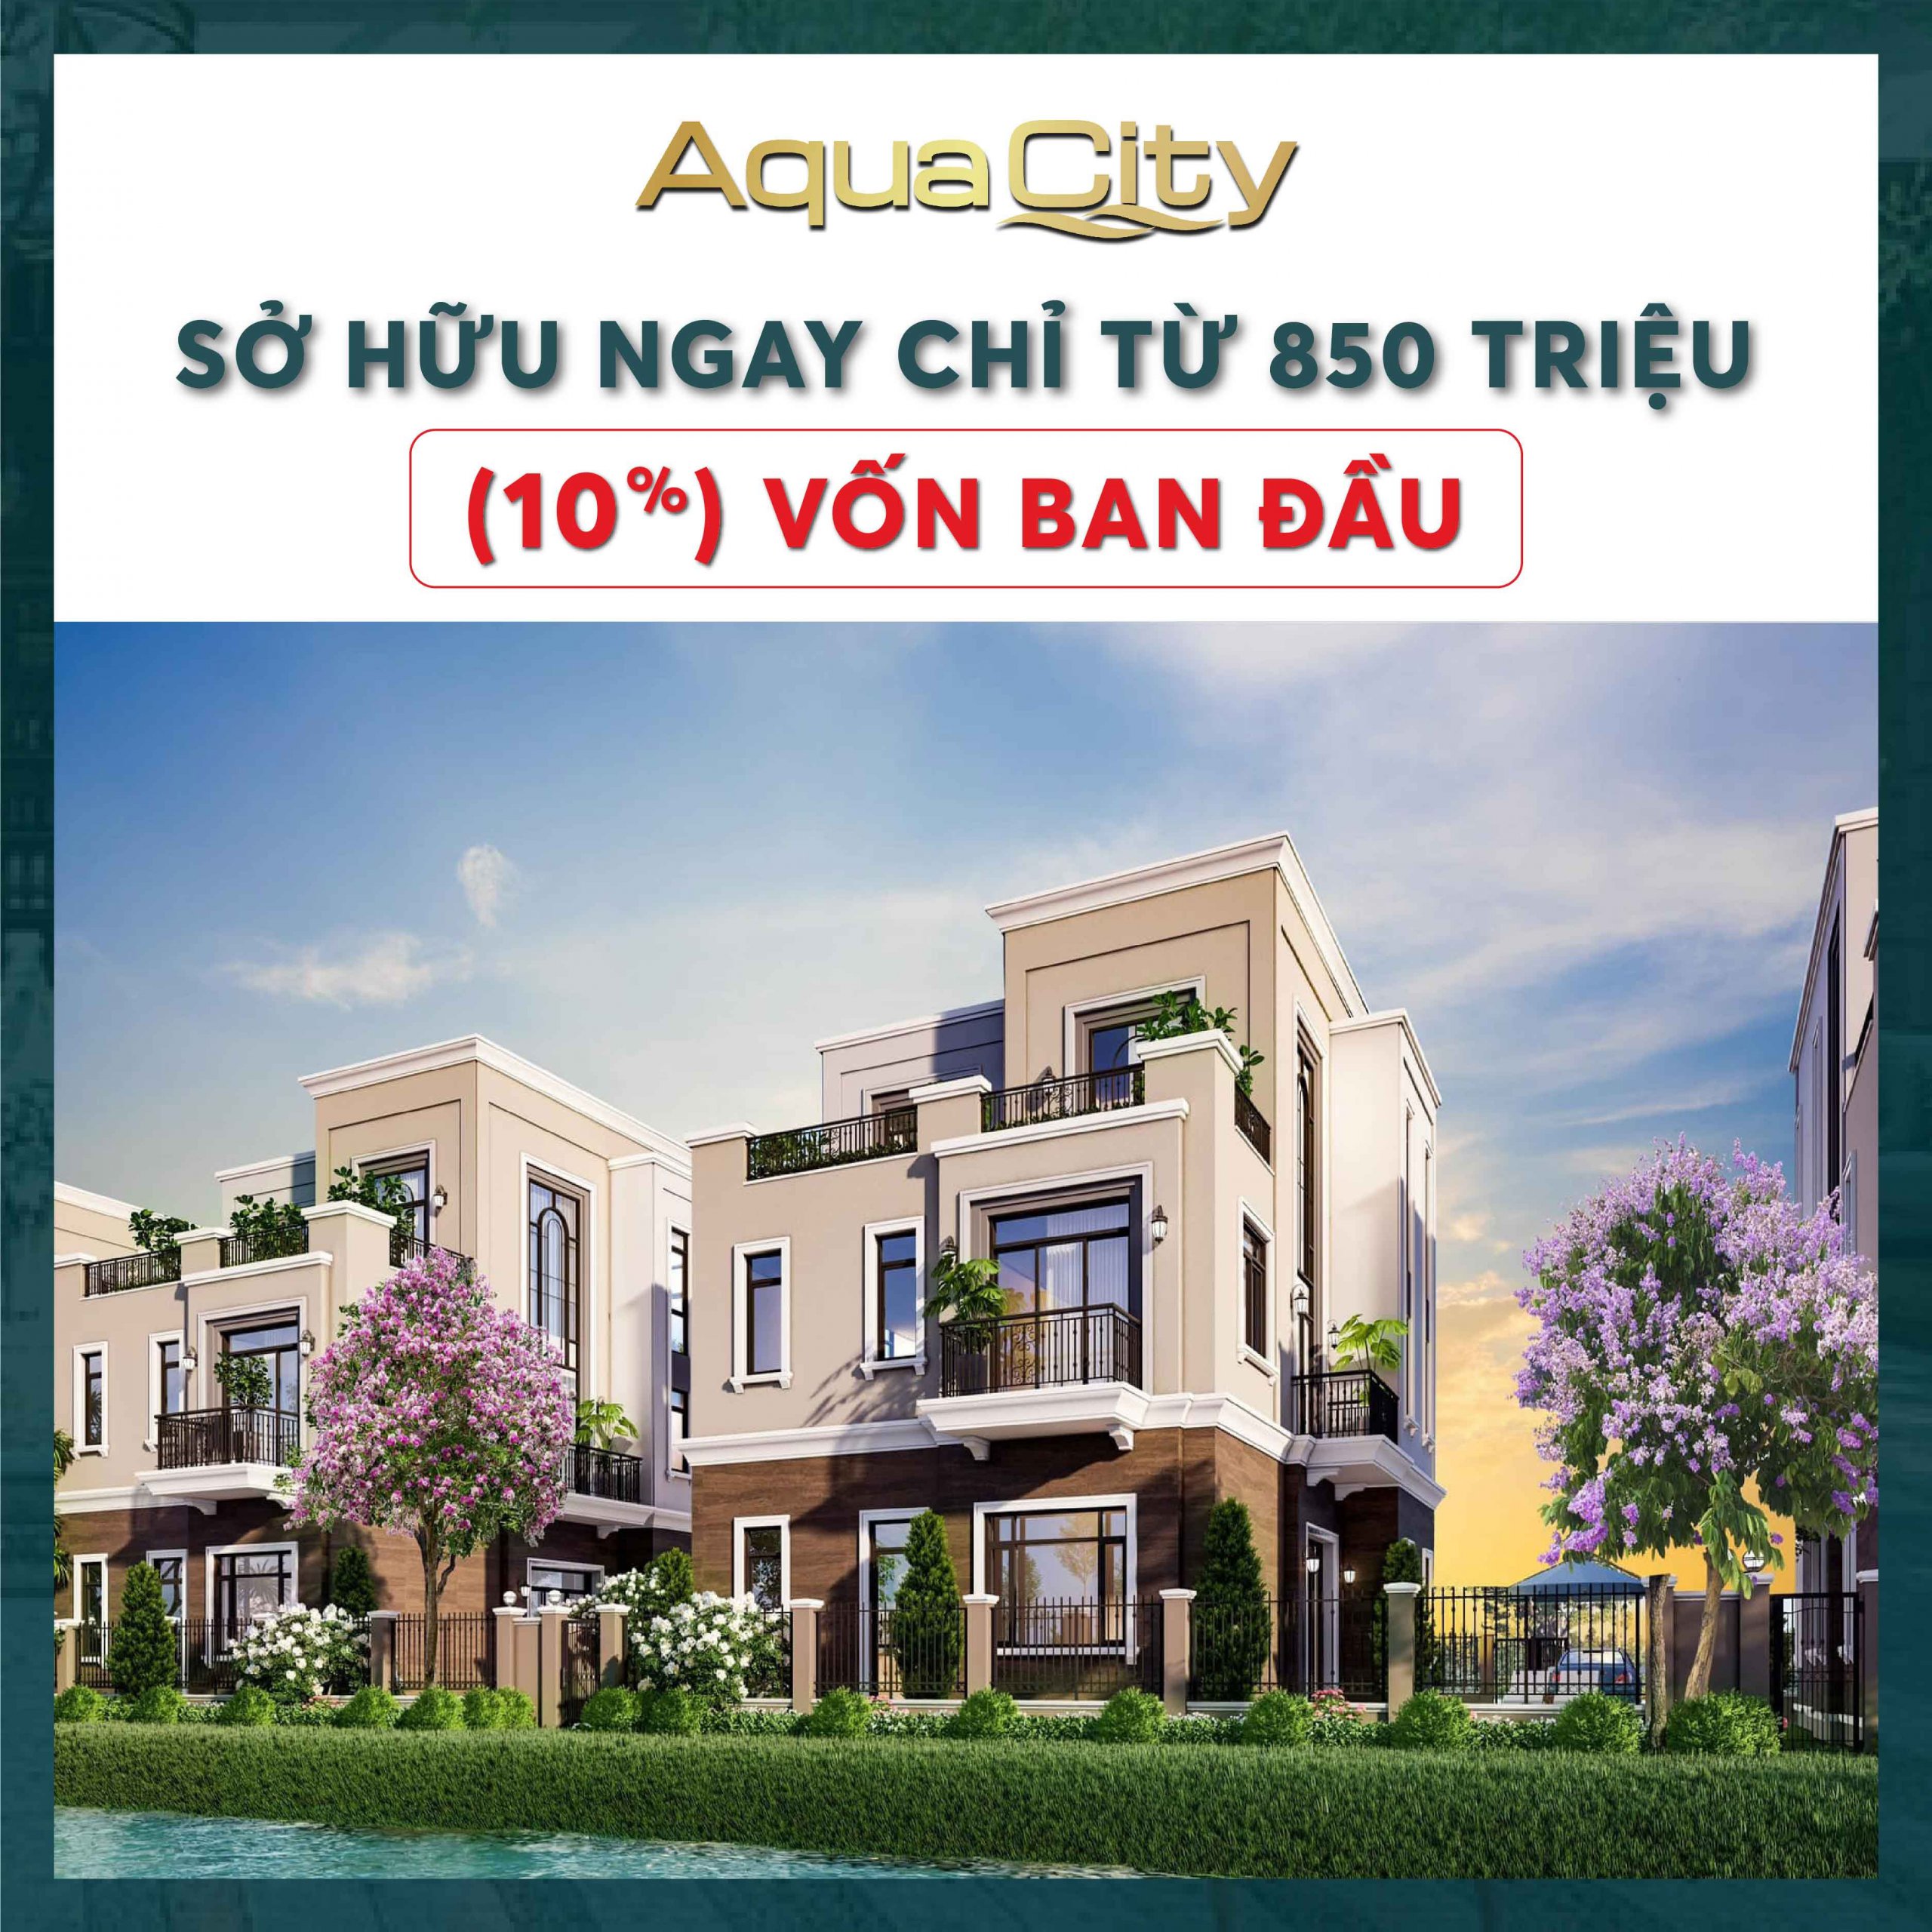 aqua-city-hoi-tu-cuoc-song-thuong-luu